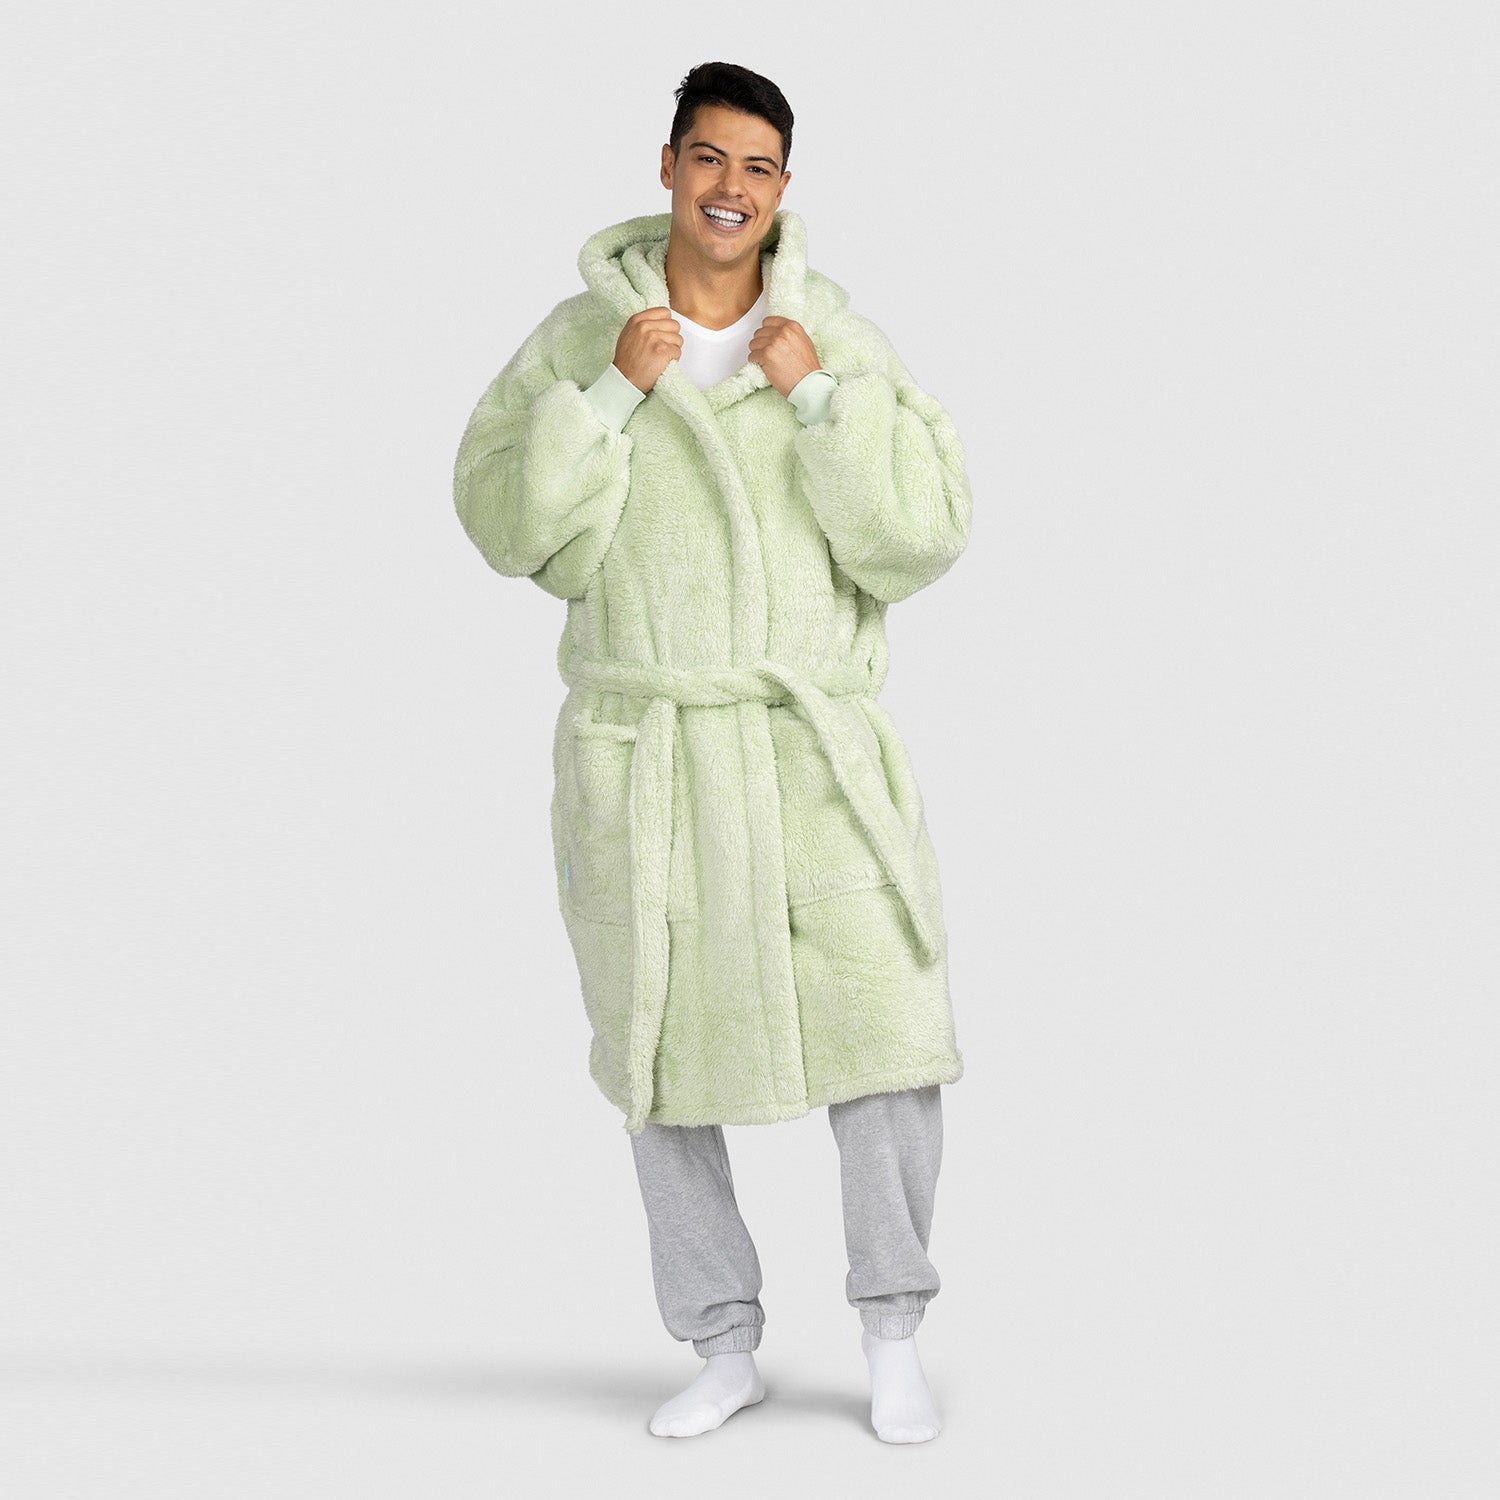 Sofa Killer dark green linen men robe – Sofa Killer super warm and cozy  loungewear for family